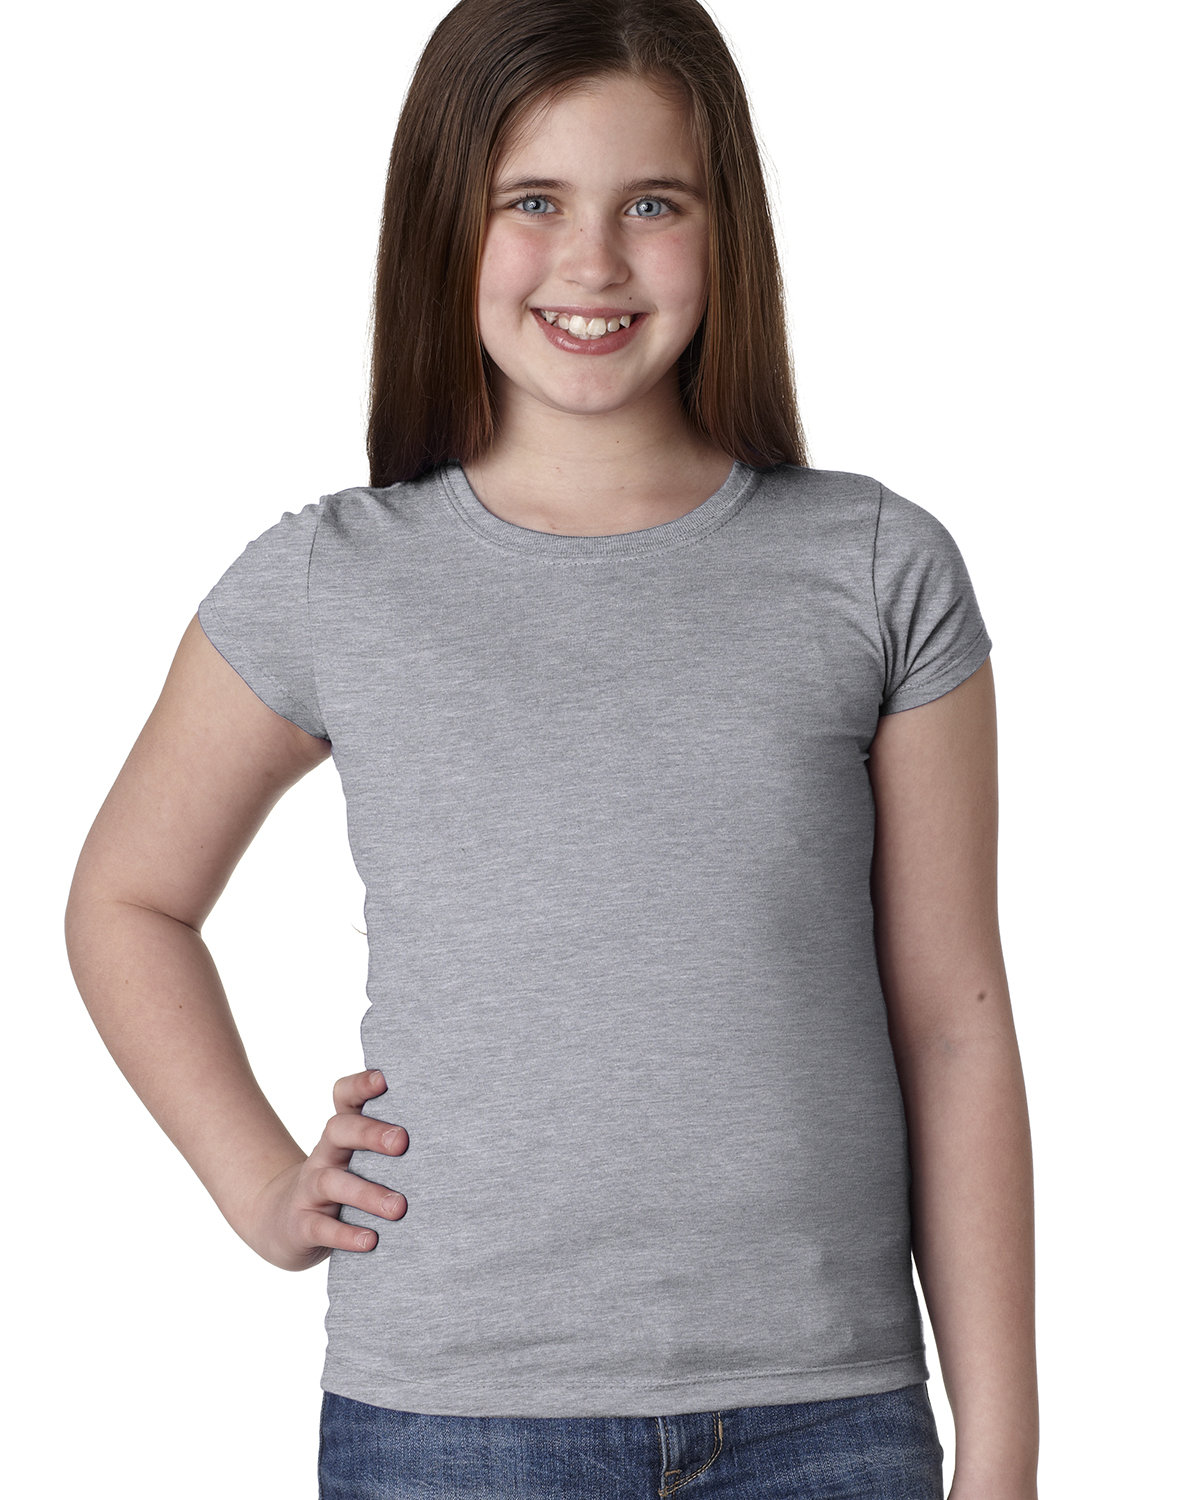 Next Level Apparel Youth Girls’ Princess T-Shirt HEATHER GRAY 